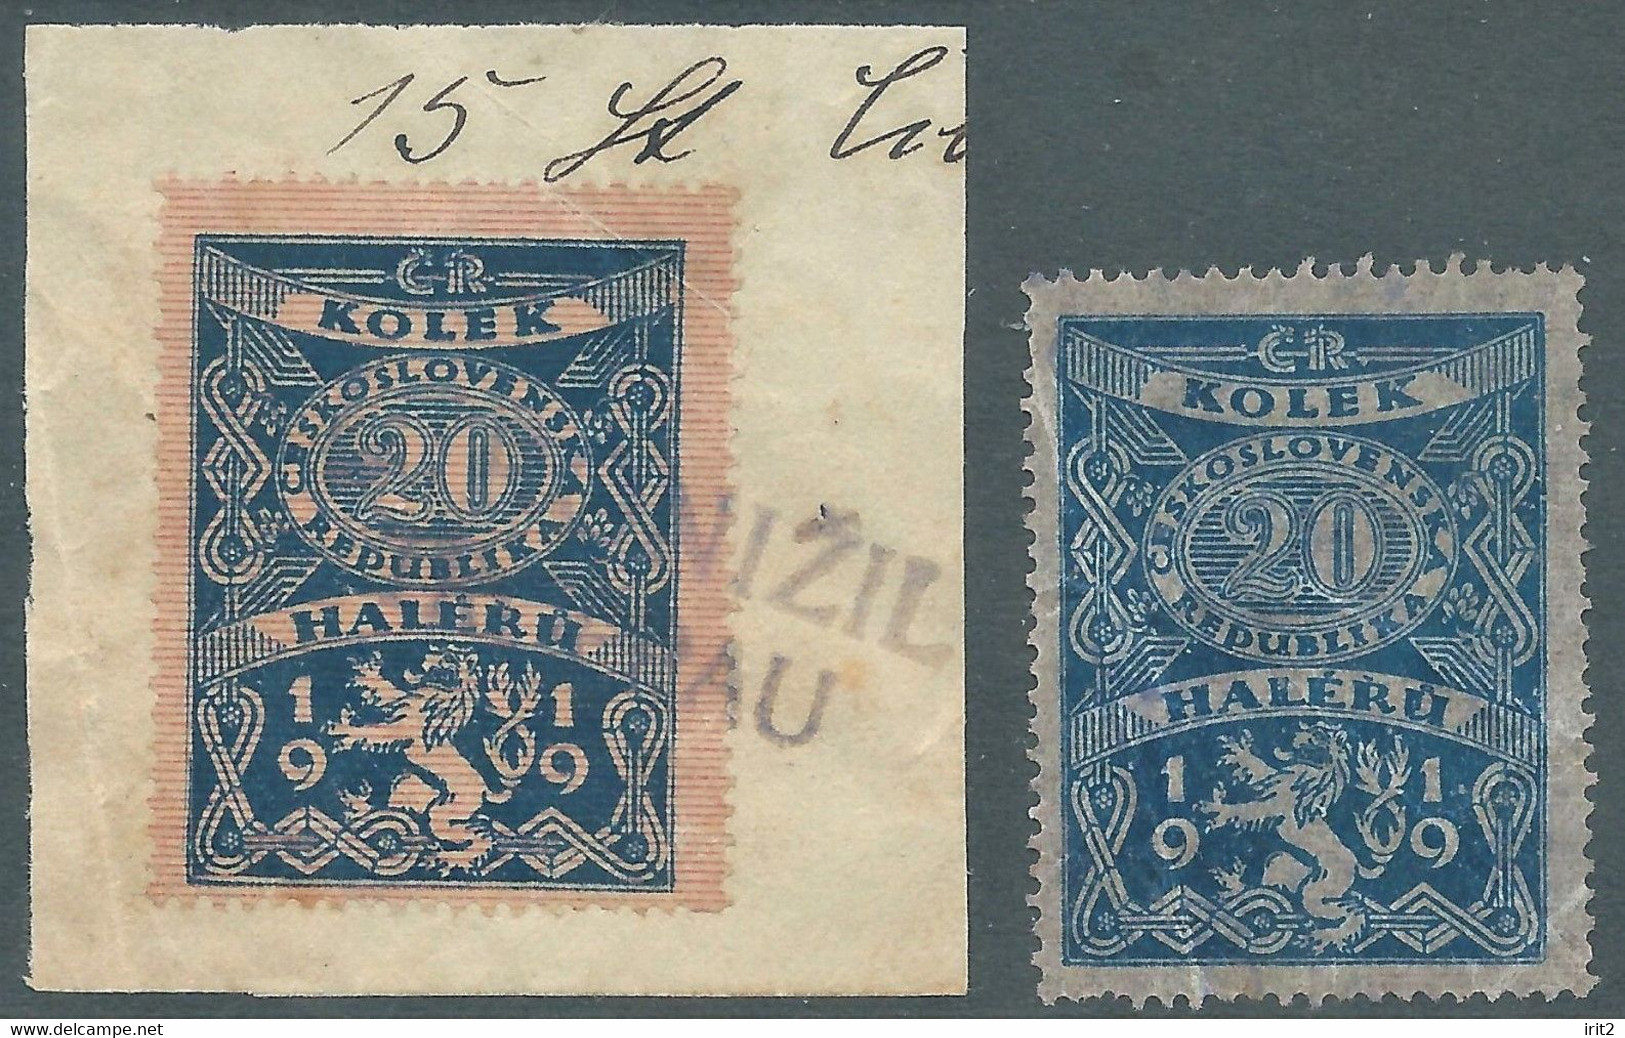 Czechoslovakia - CECOSLOVACCHIA.1919 Revenue Stamps Tax Fiscal,Kolek 20 Haleru,Used - Official Stamps